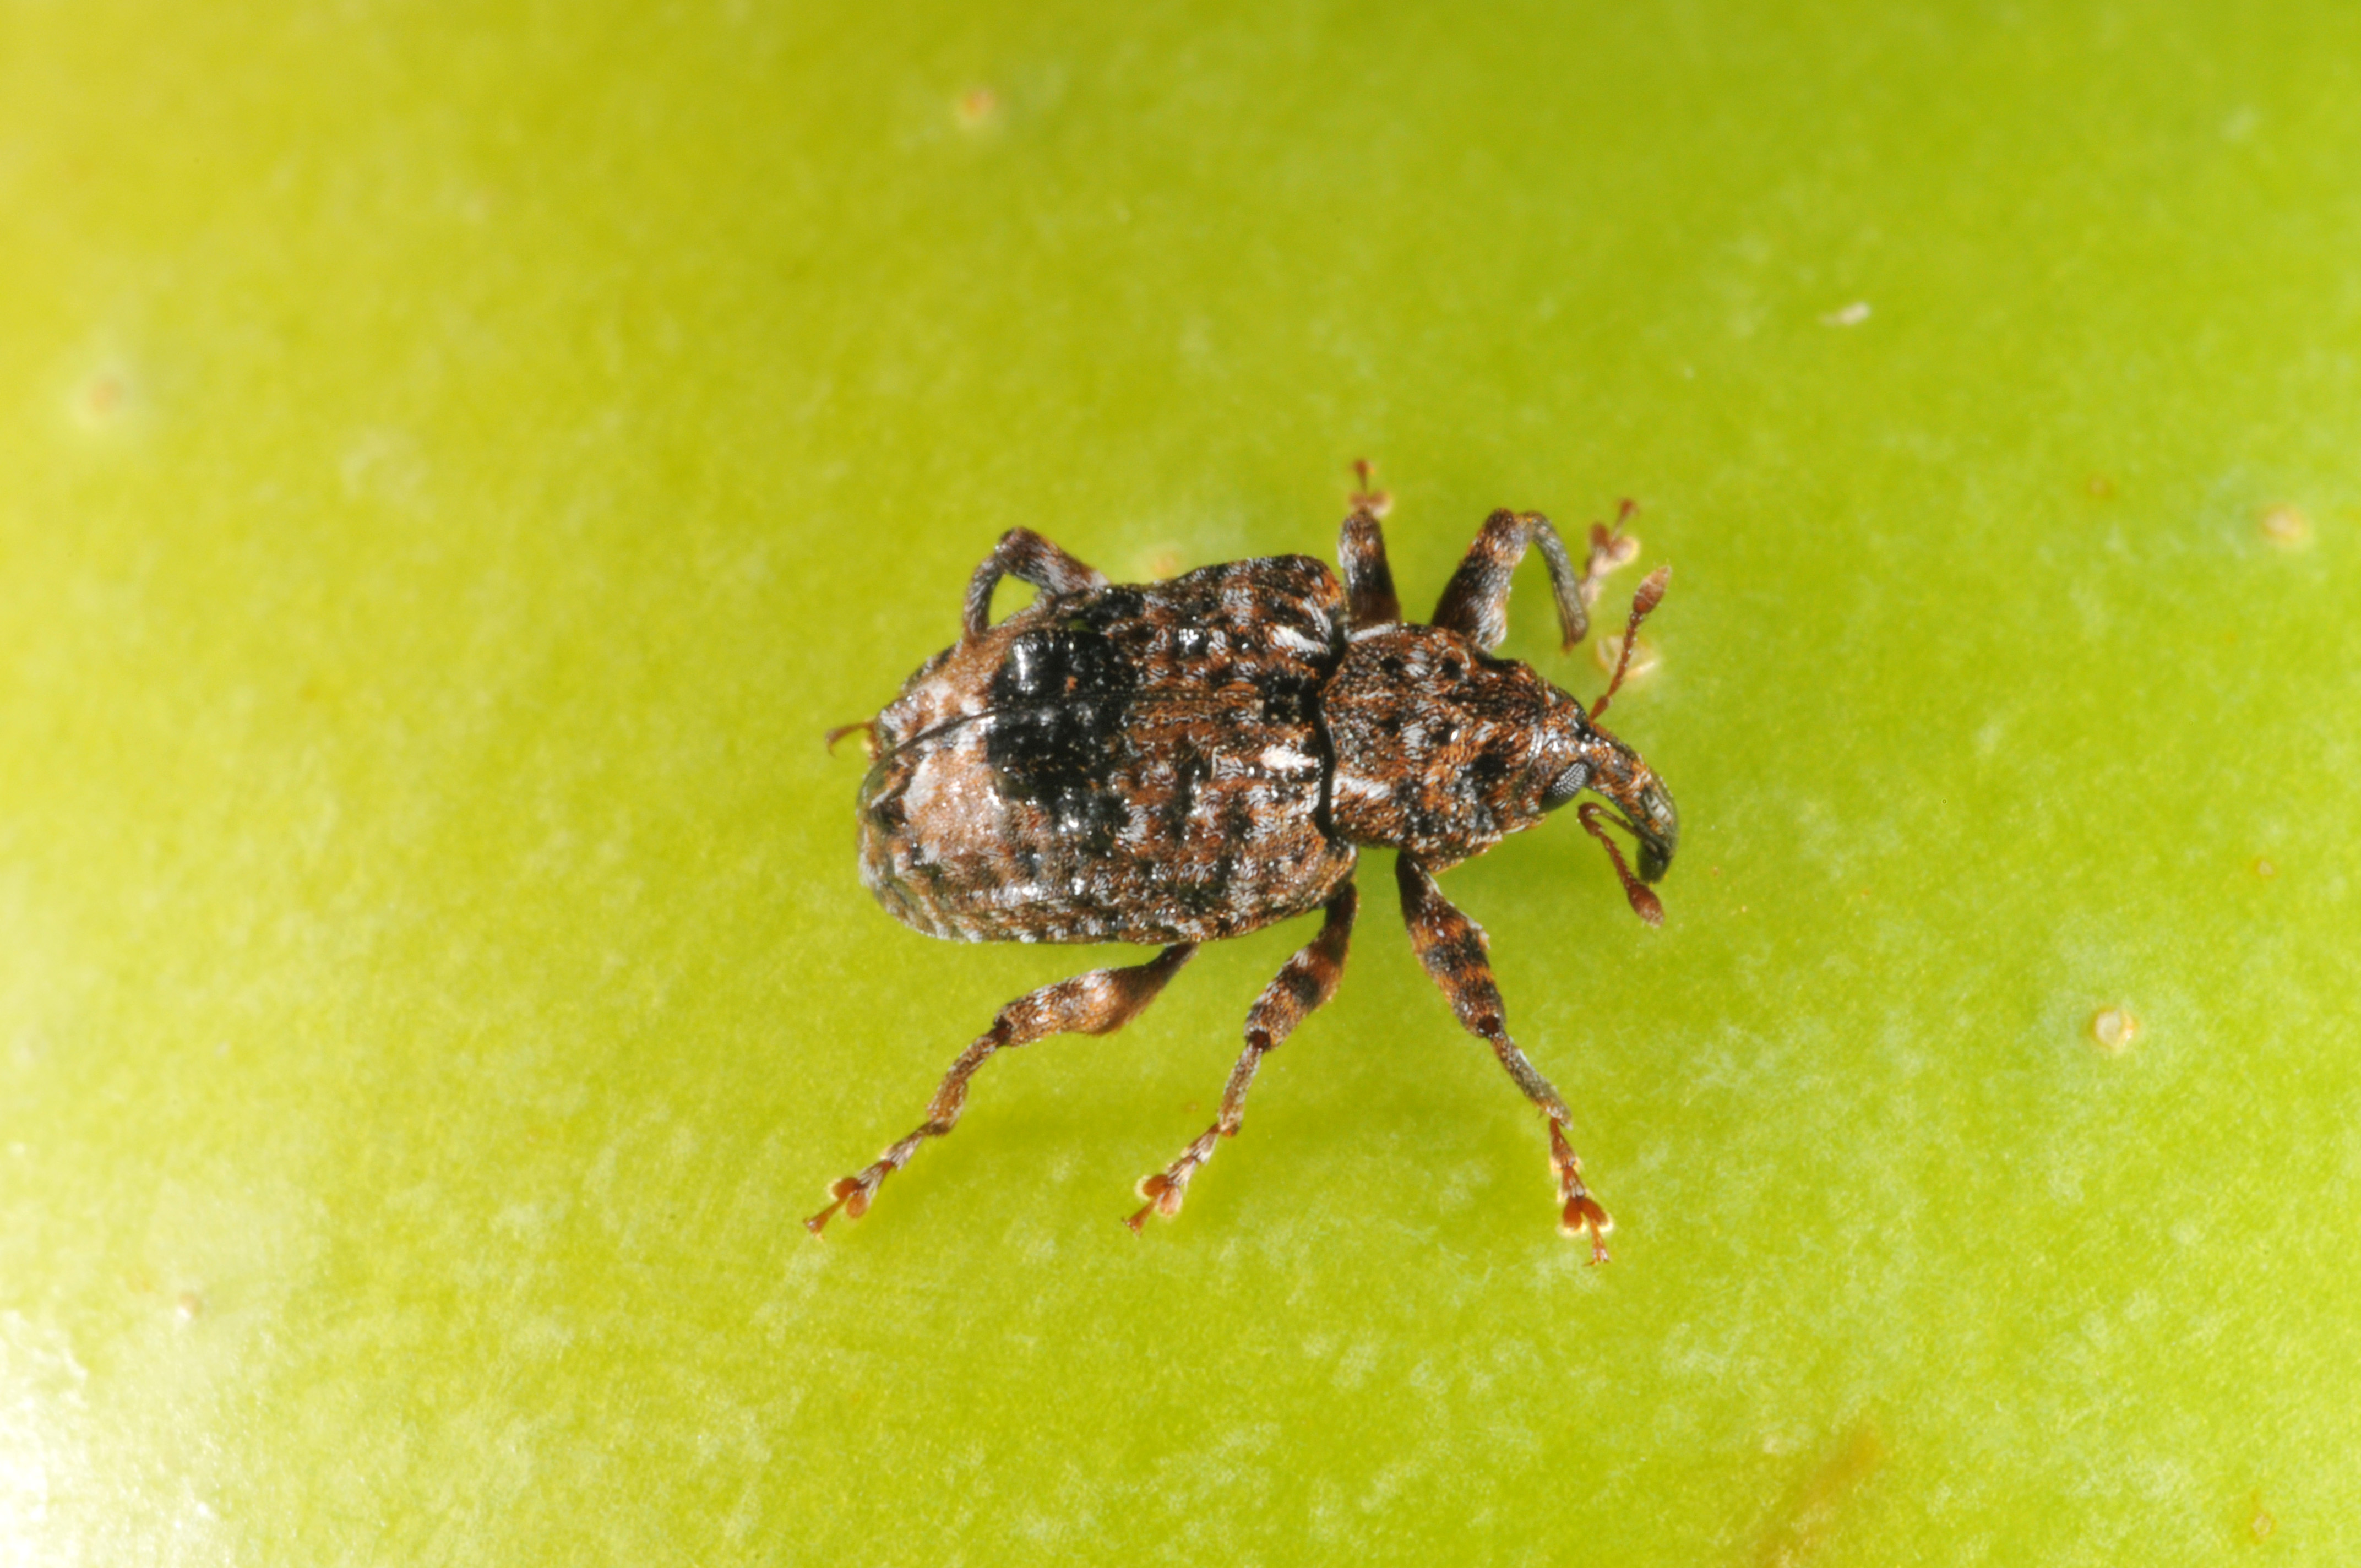 Figure 9. Adult plum curculio beetle on the surface of an apple. (<em>Photo credit: John Obermeyer, Purdue Entomology</em>)